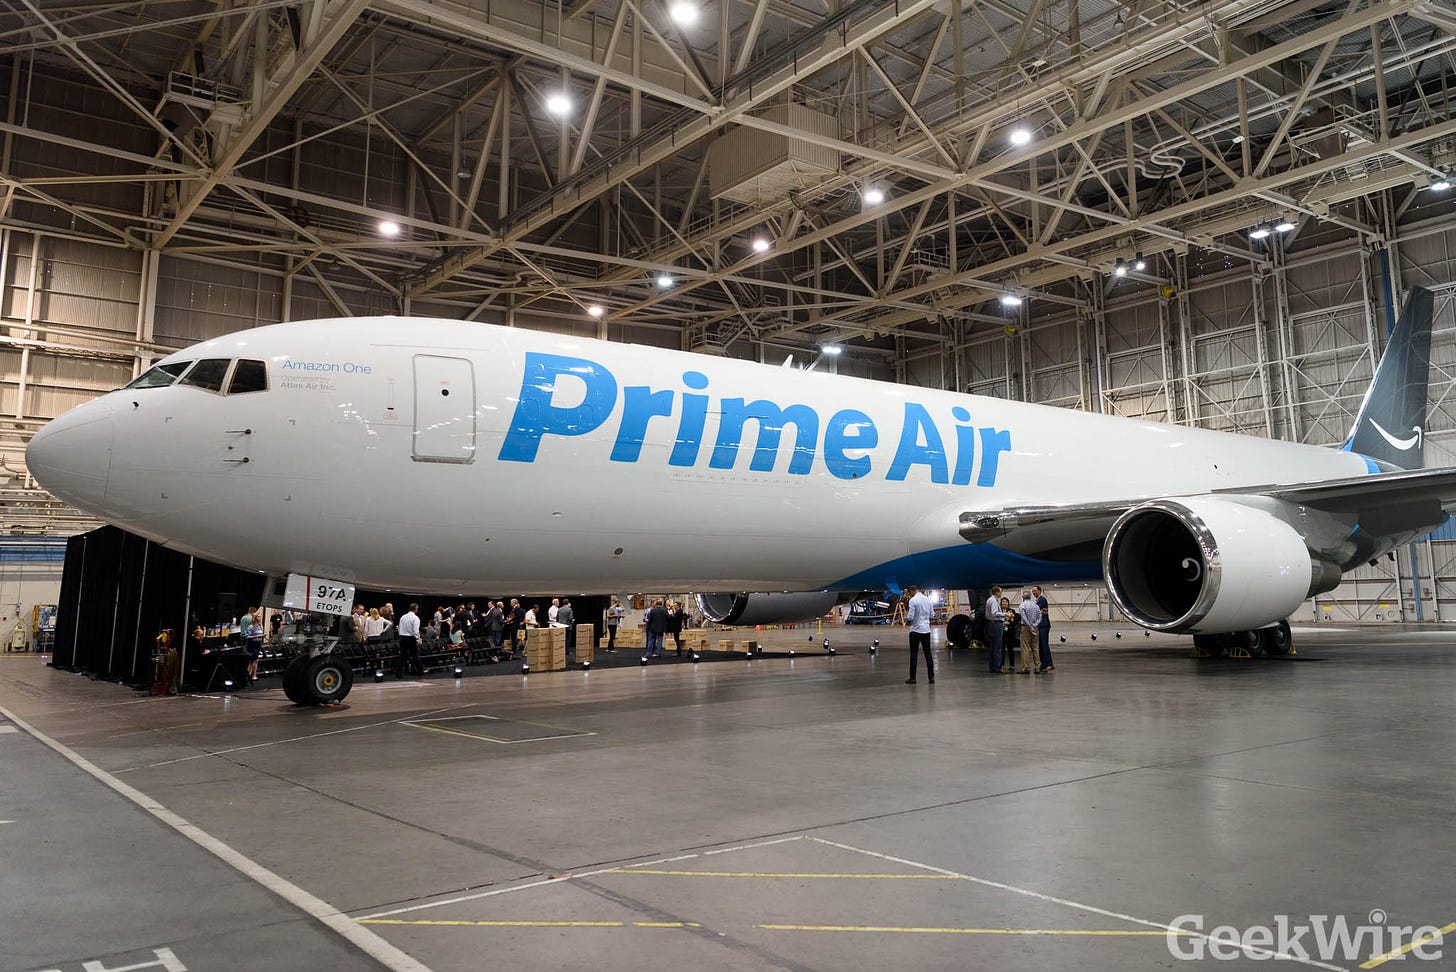 Amazon Prime airplane debuts after secret night flight - GeekWire